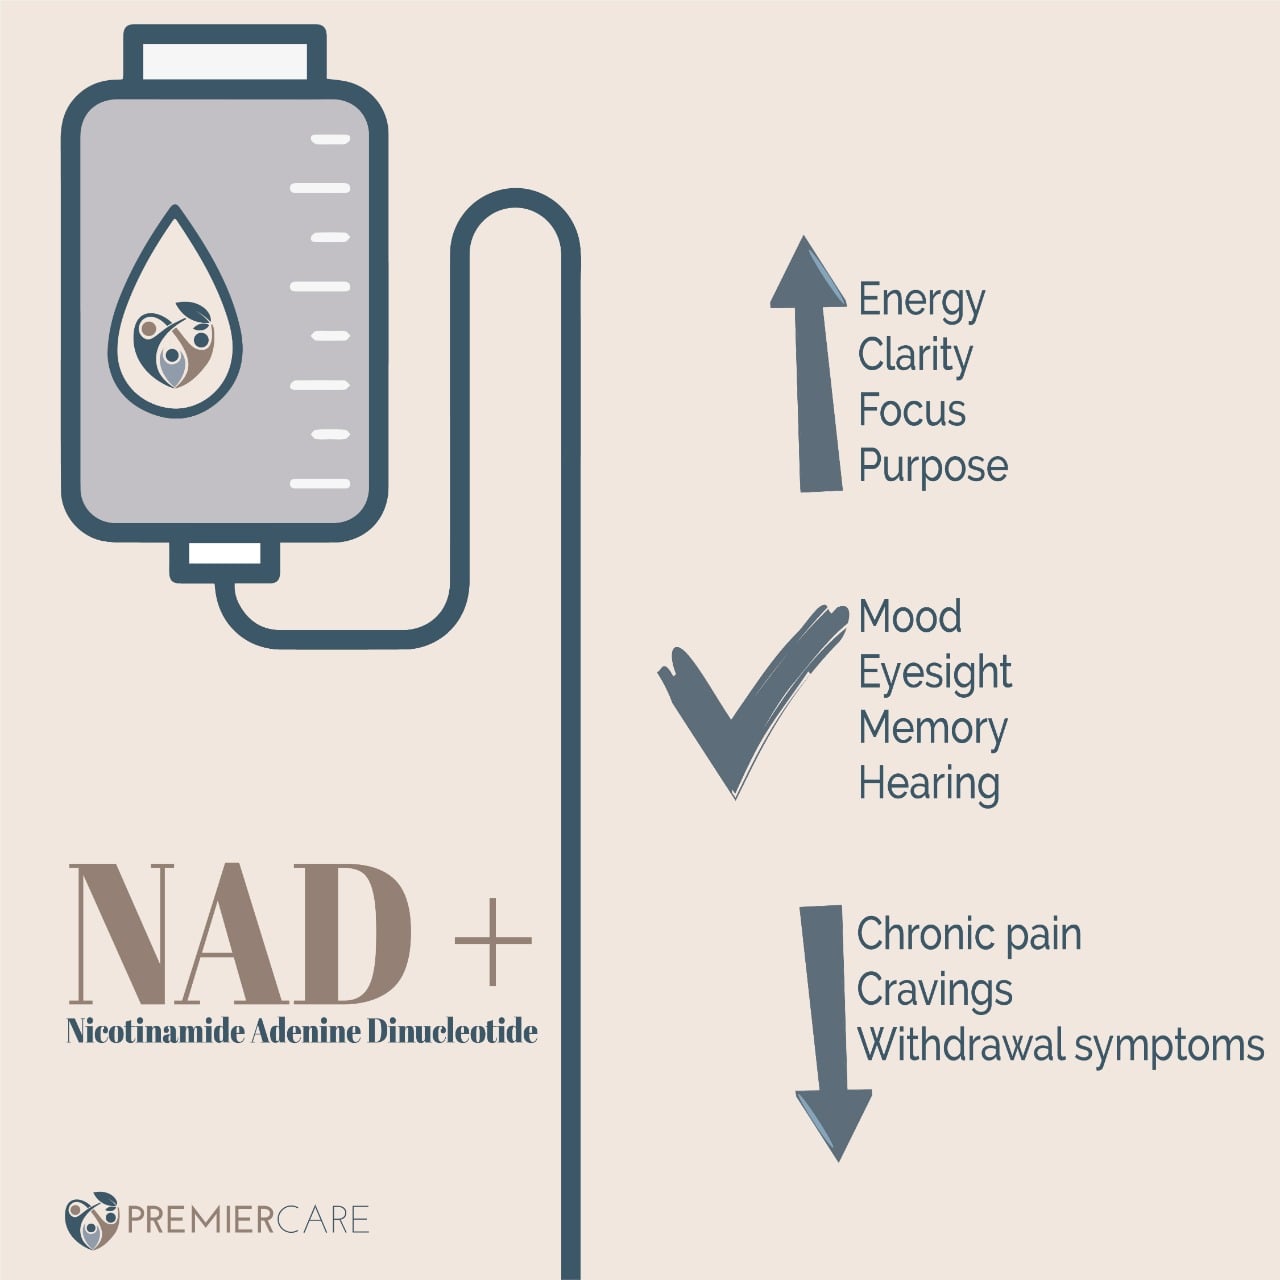 nicotinamide adenine dinculeotide or NAD+